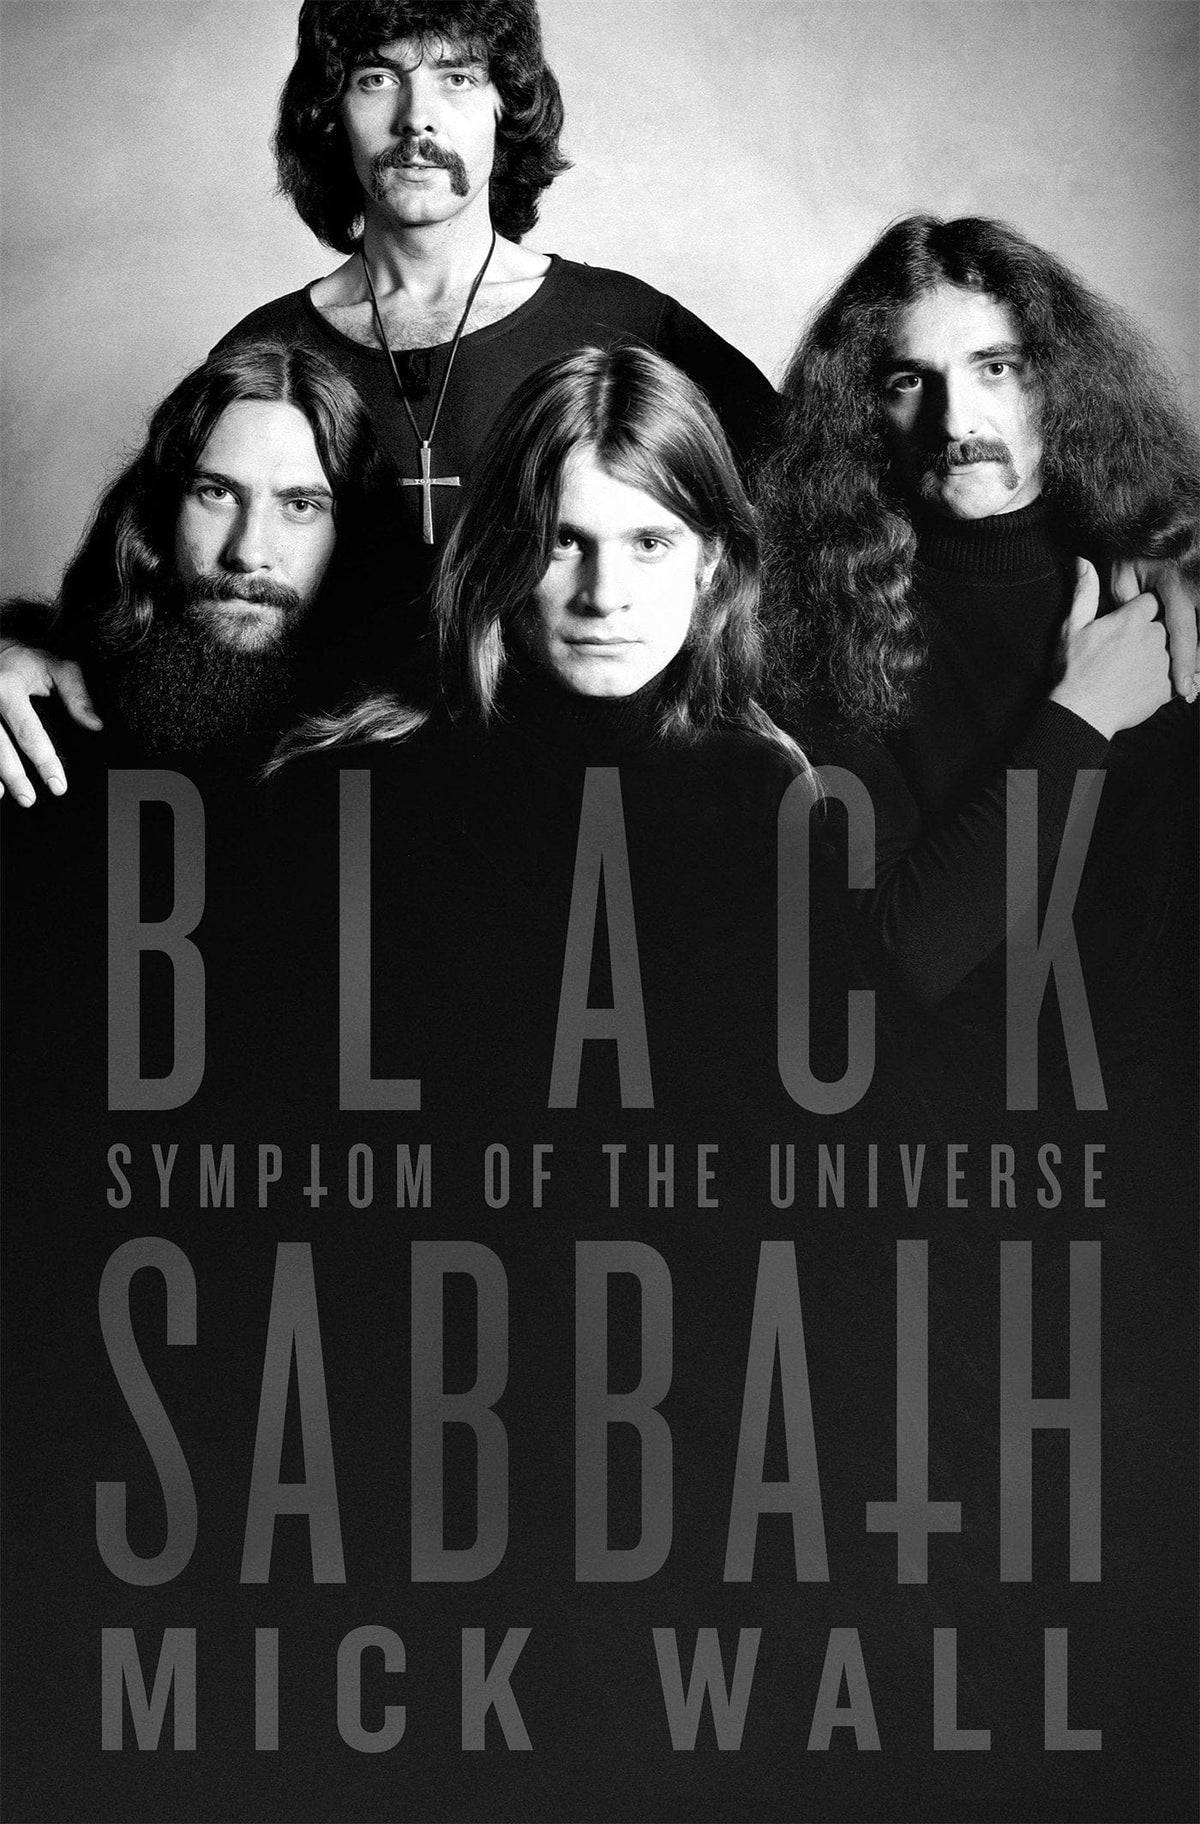 Black Sabbath - Mick Wall [BOOK]